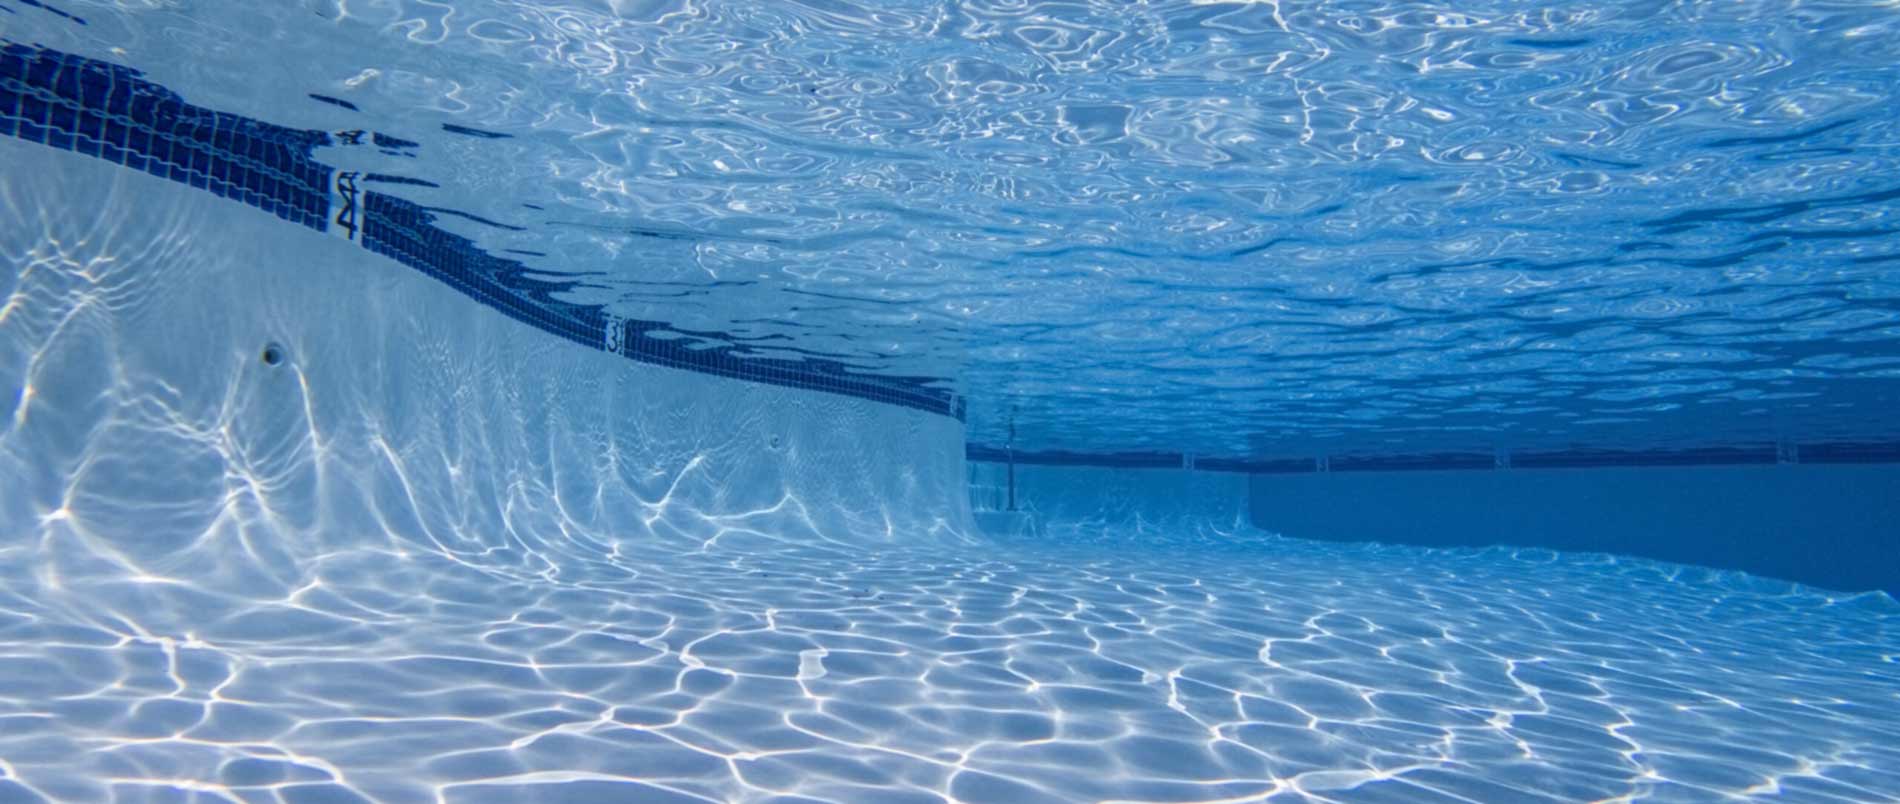 Water In Pool